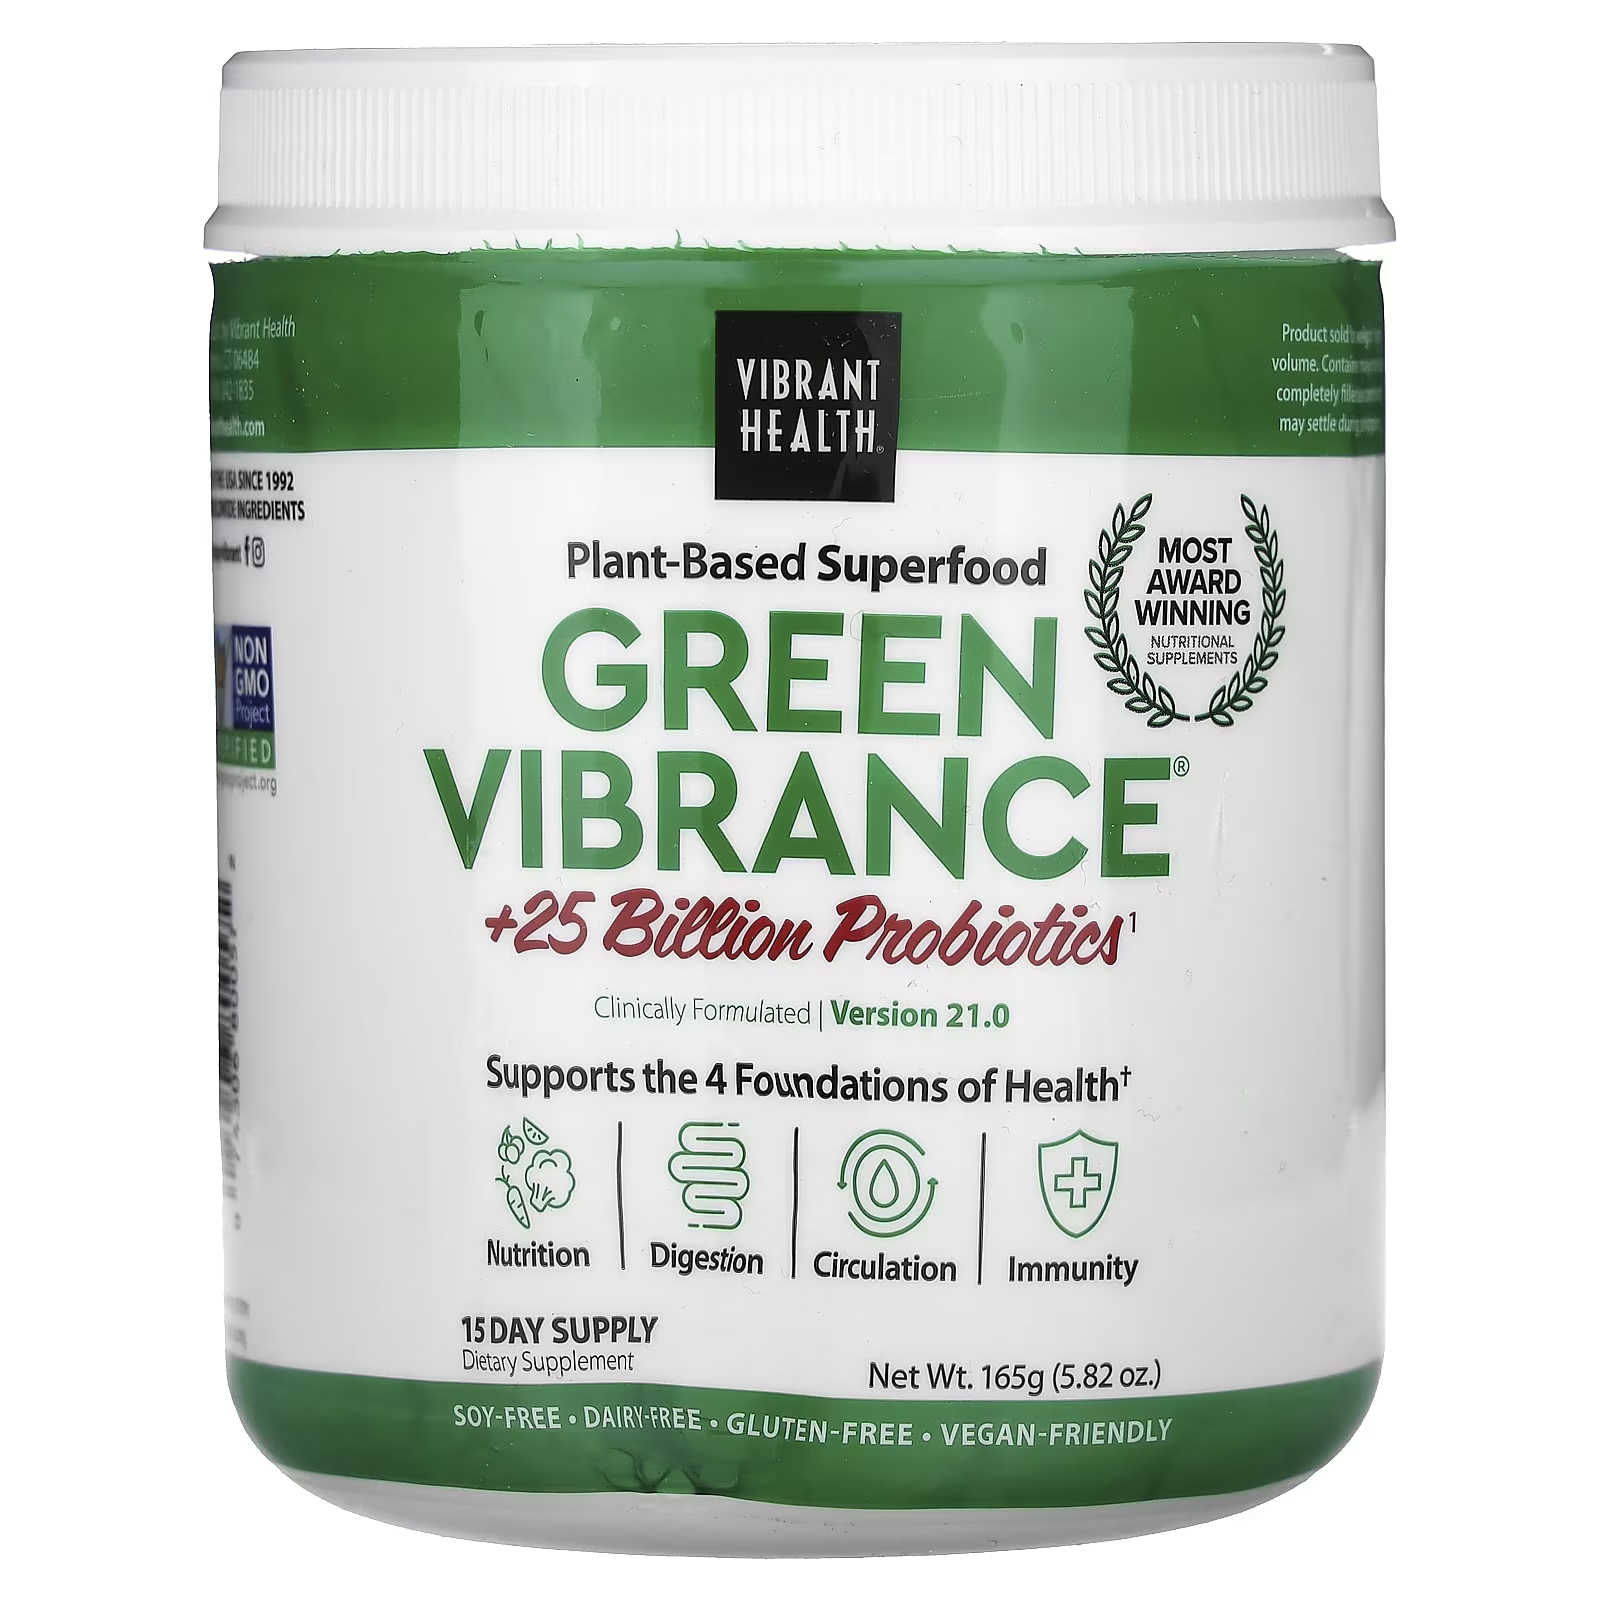 Пищевая добавка Vibrant Health Green Vibrance +25 миллиардов пробиотиков, 165 г vibrant health green vibrance 25 млрд пробиотиков версия 19 1 168 г 5 96 унции